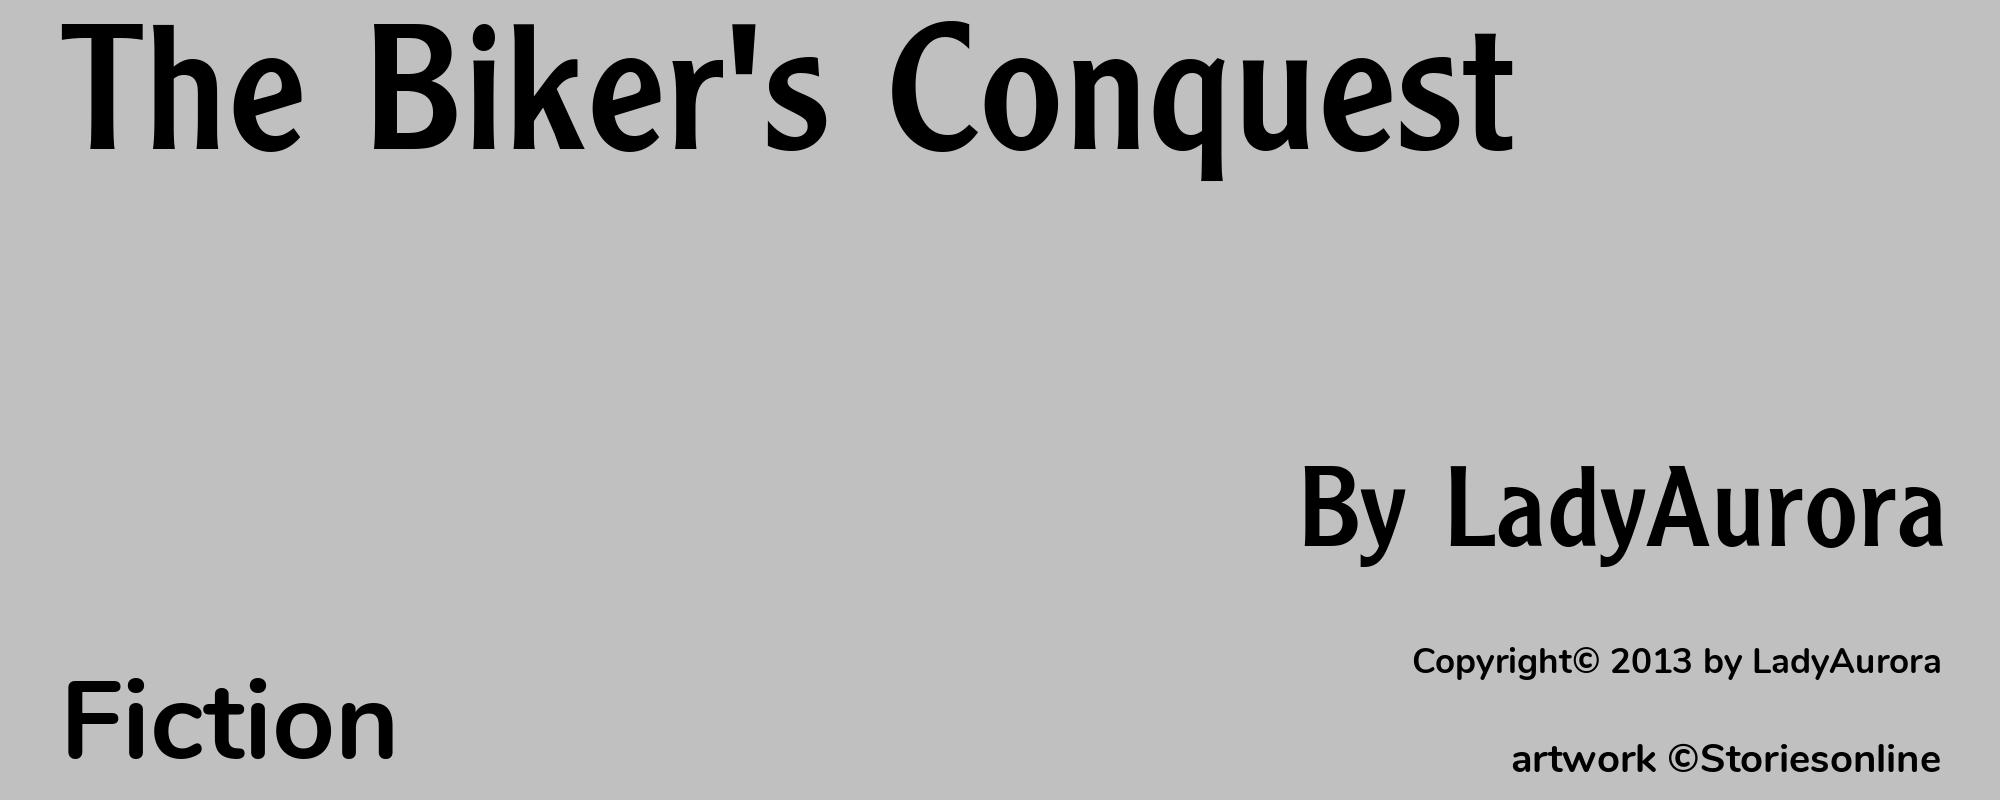 The Biker's Conquest - Cover